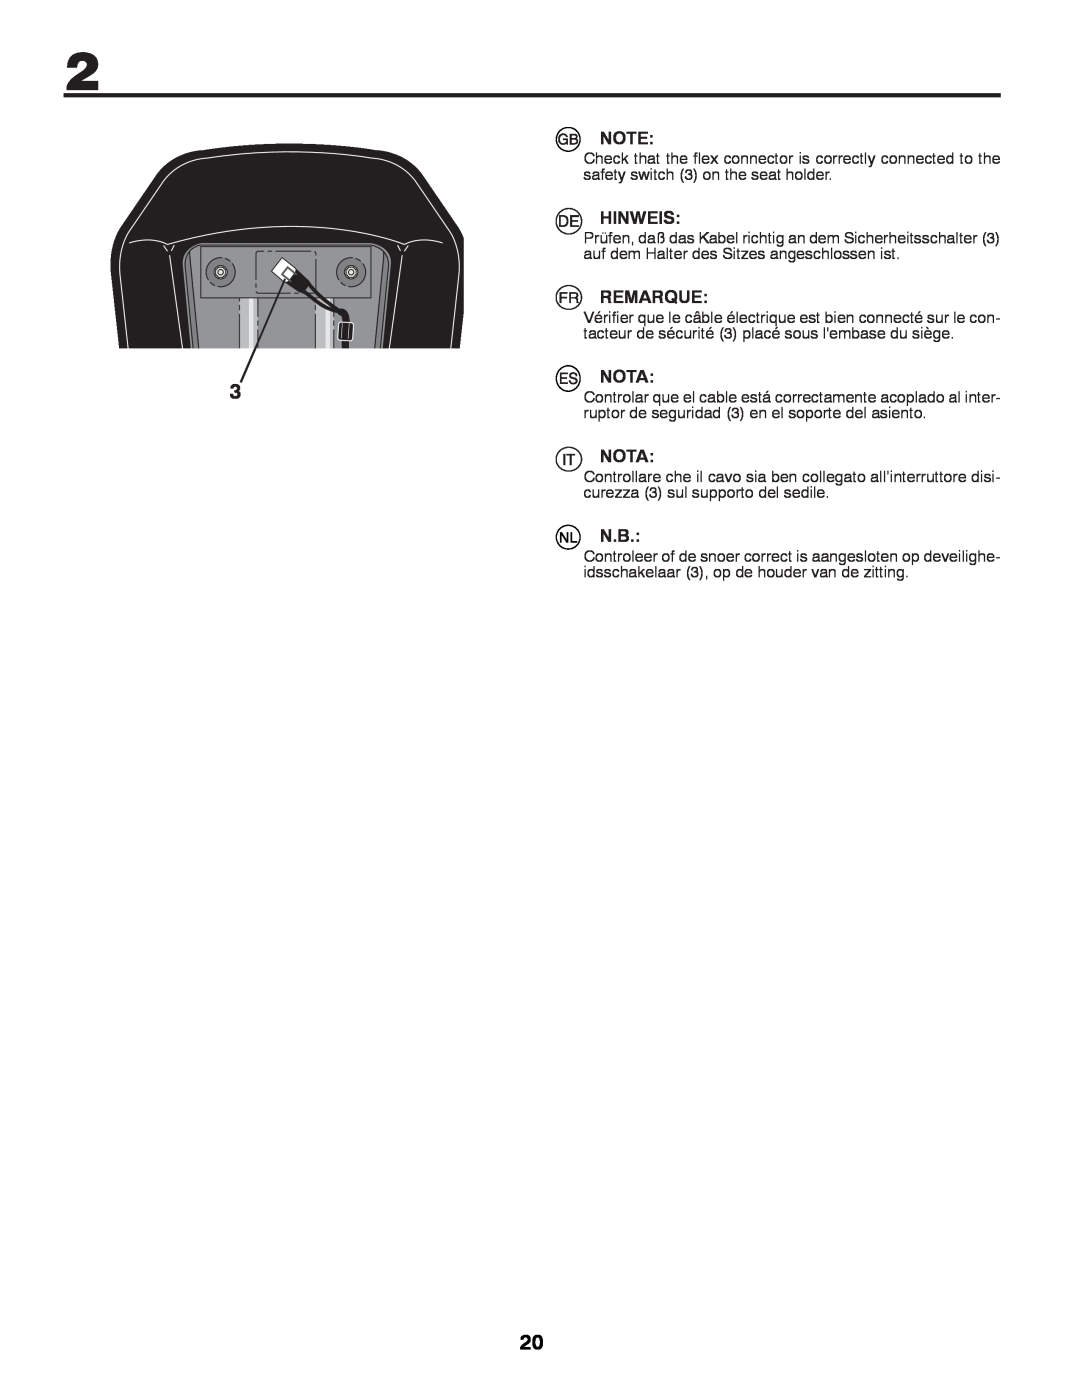 Partner Tech P11577 instruction manual Hinweis, Remarque, Nota, auf dem Halter des Sitzes angeschlossen ist 